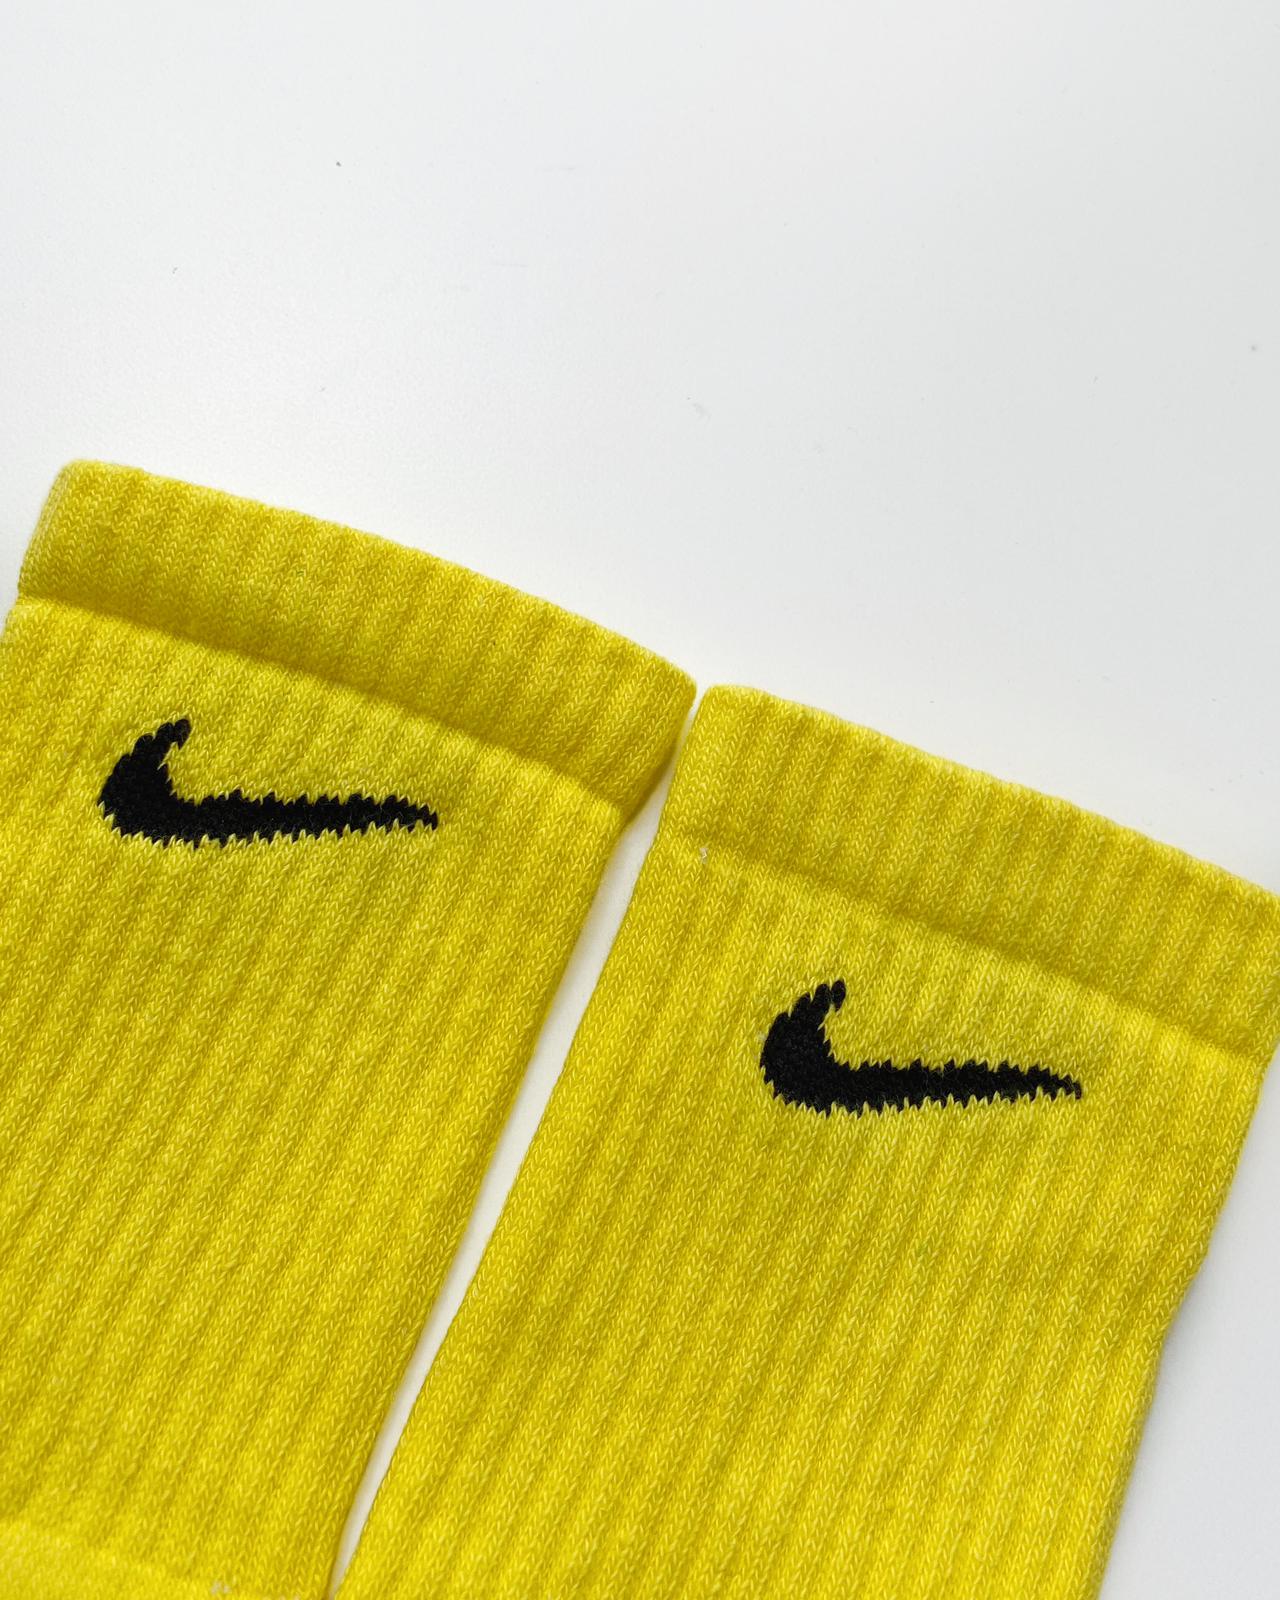 Calcetines Nike customizado basic colour Yellow detalhes. Calcetines únicos y diferentes 100% originales teñidos a mano. Shop NOW!